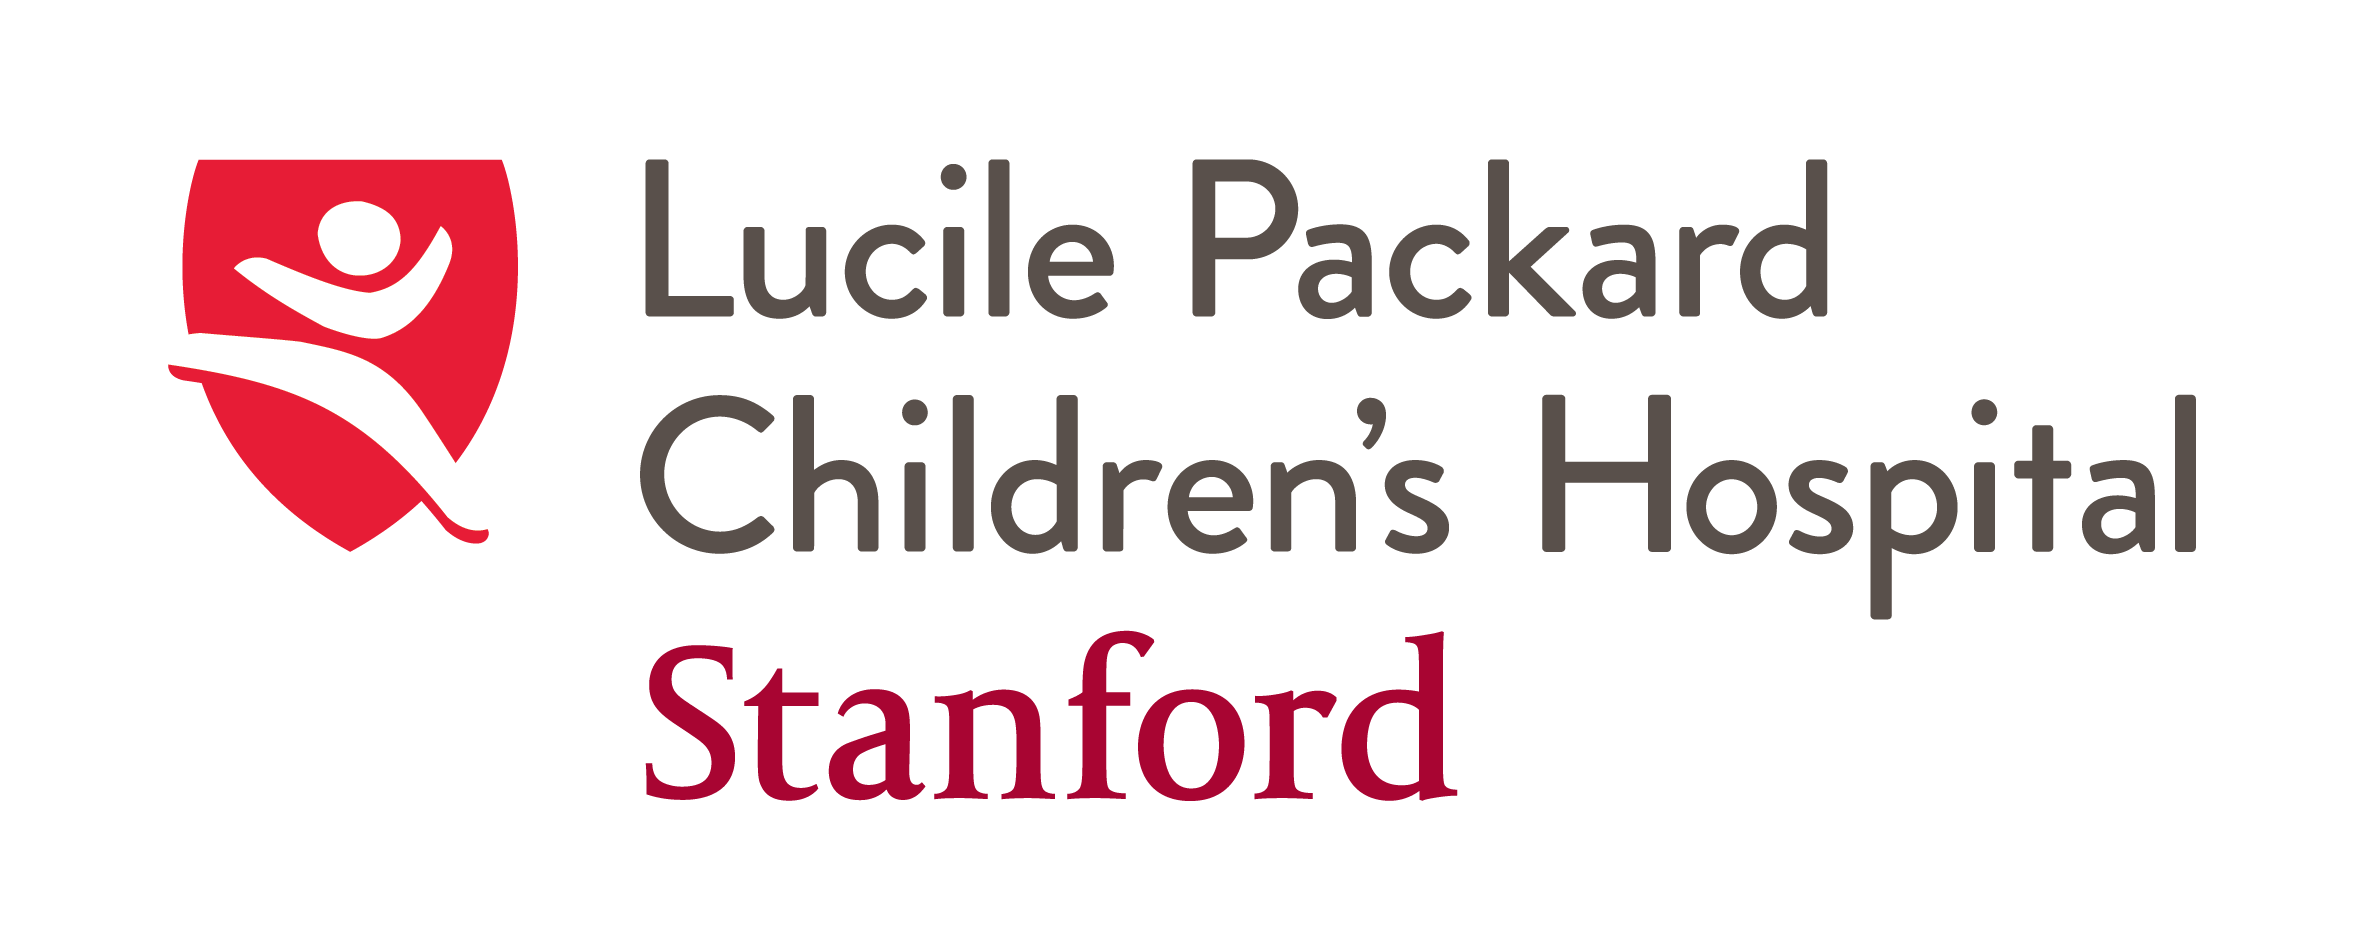 Stanford Logo - Brand Standards and Logos Children's Health